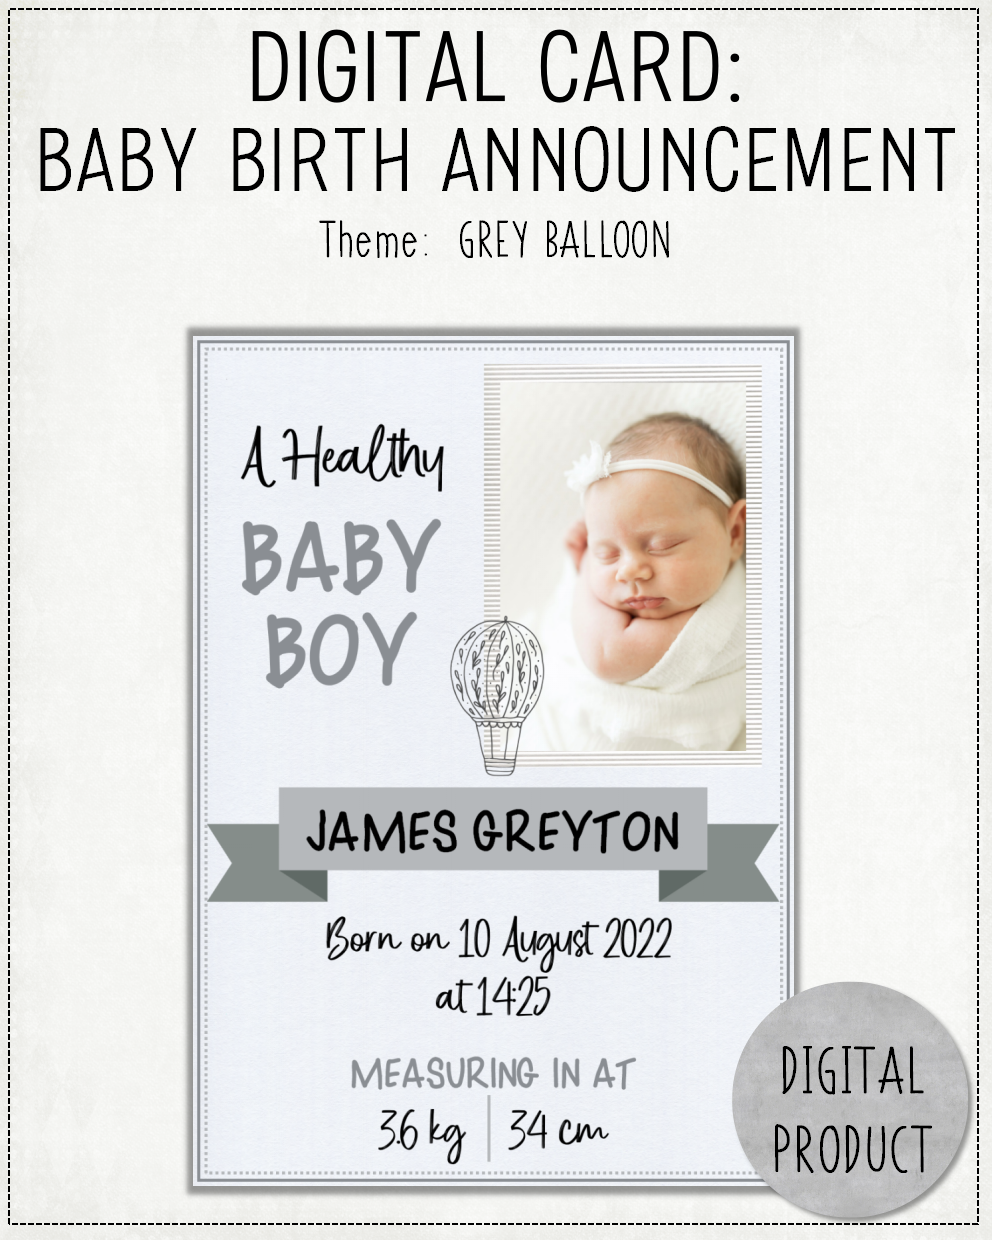 DIGITAL CARD: Baby Birth Announcement - Grey Balloon (English or Afrikaans)